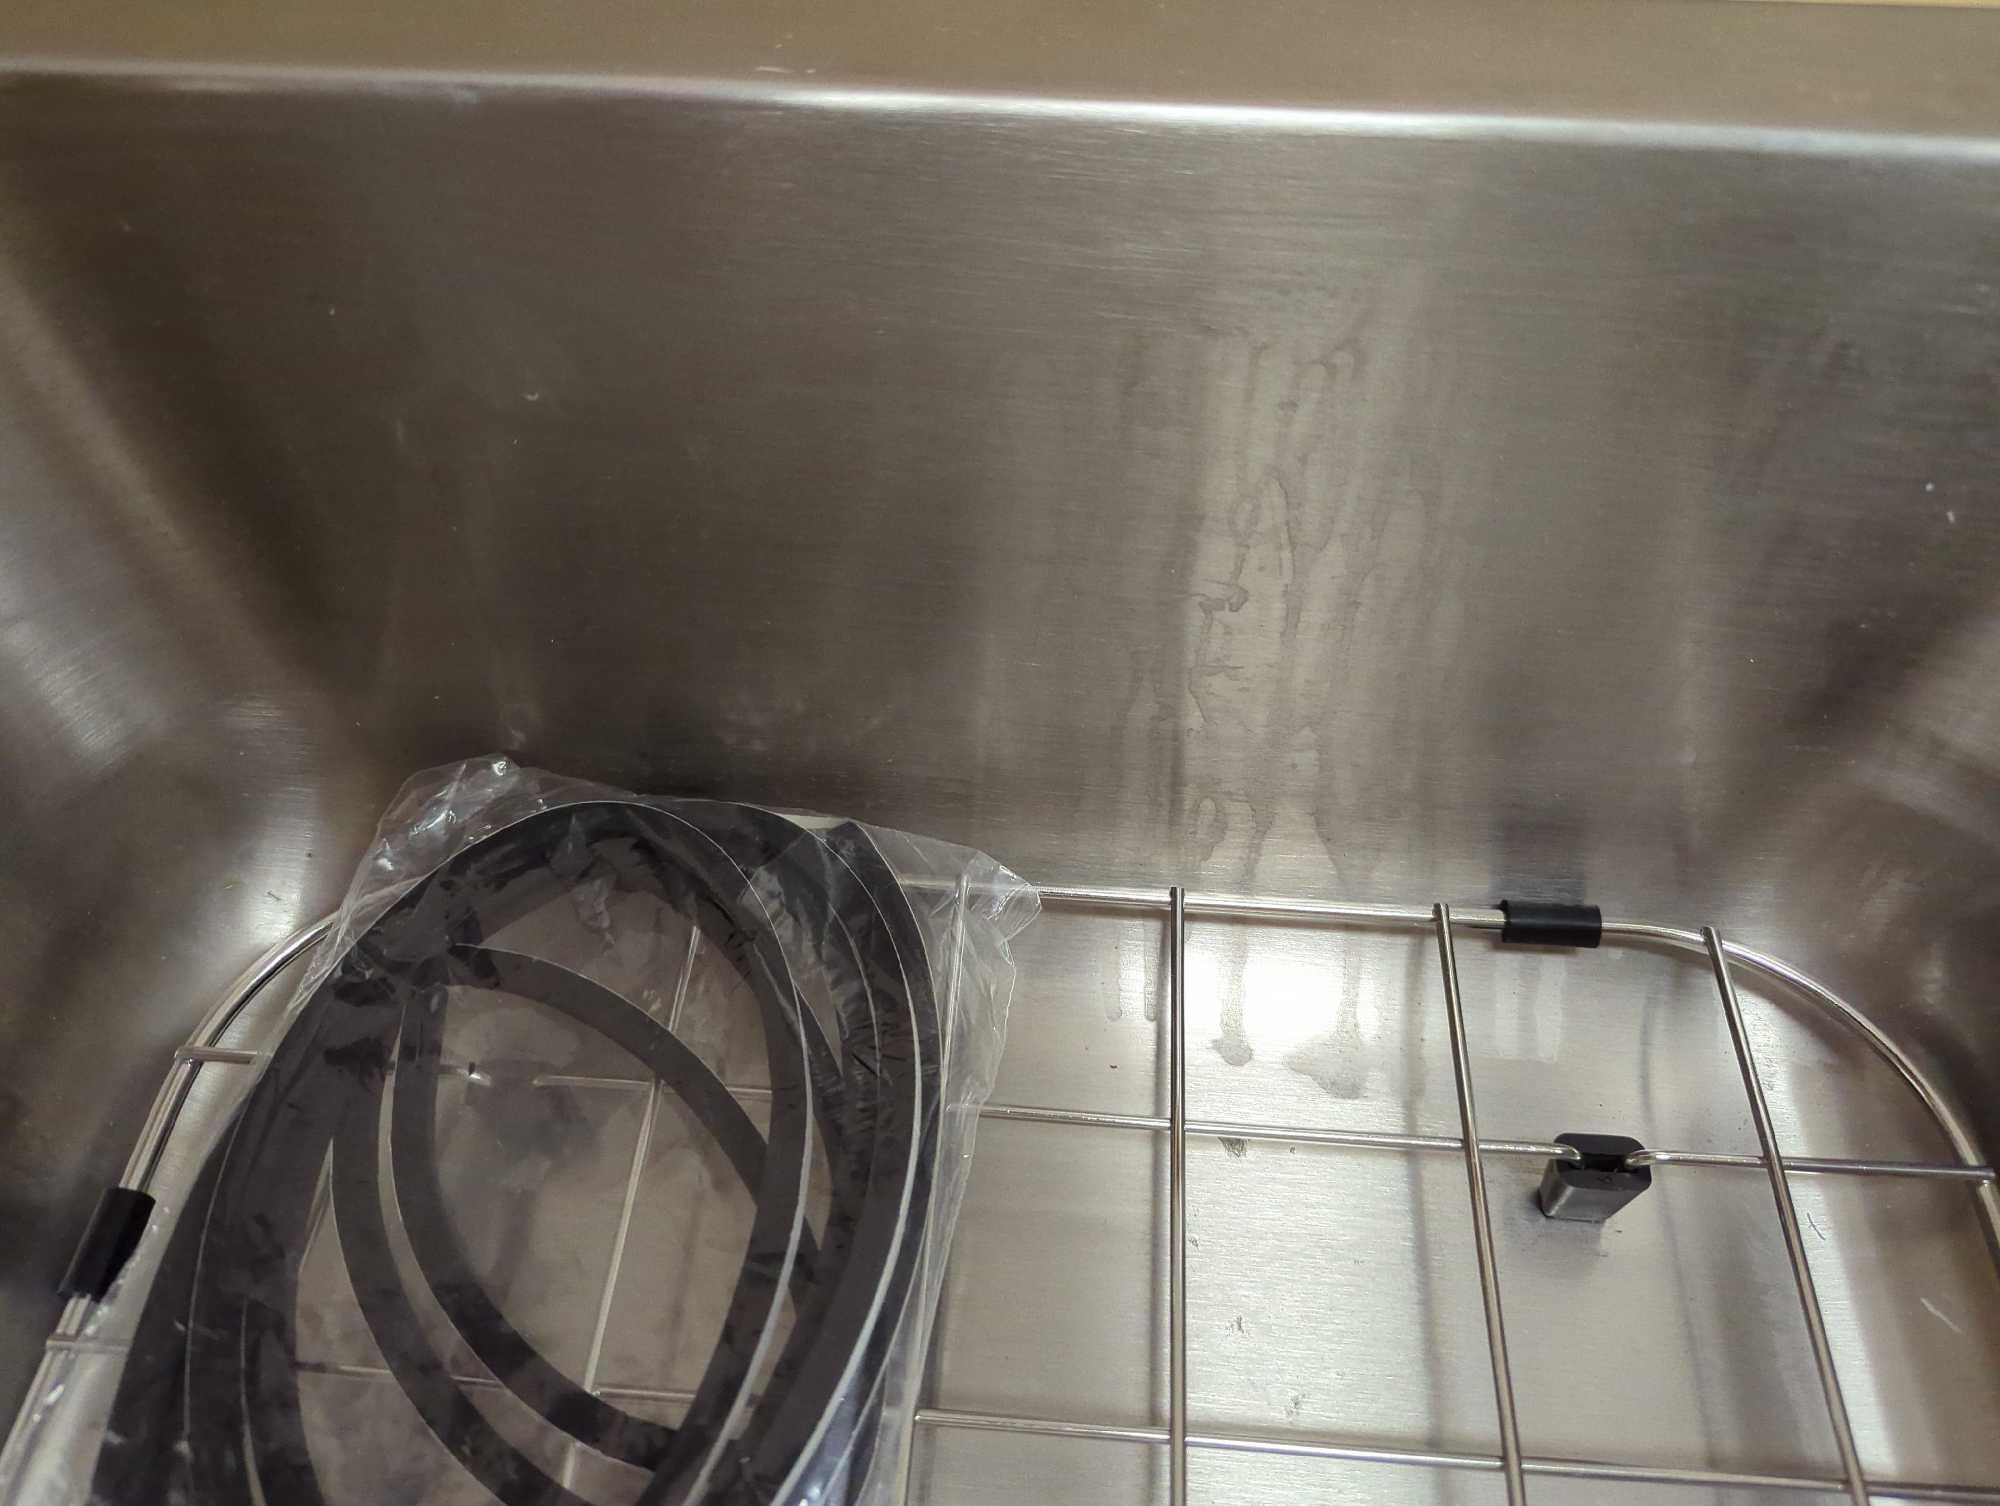 Glacier Bay Bratten 25 in. Drop-In Single Bowl 18 Gauge Stainless Steel Kitchen Sink with Pull-Down